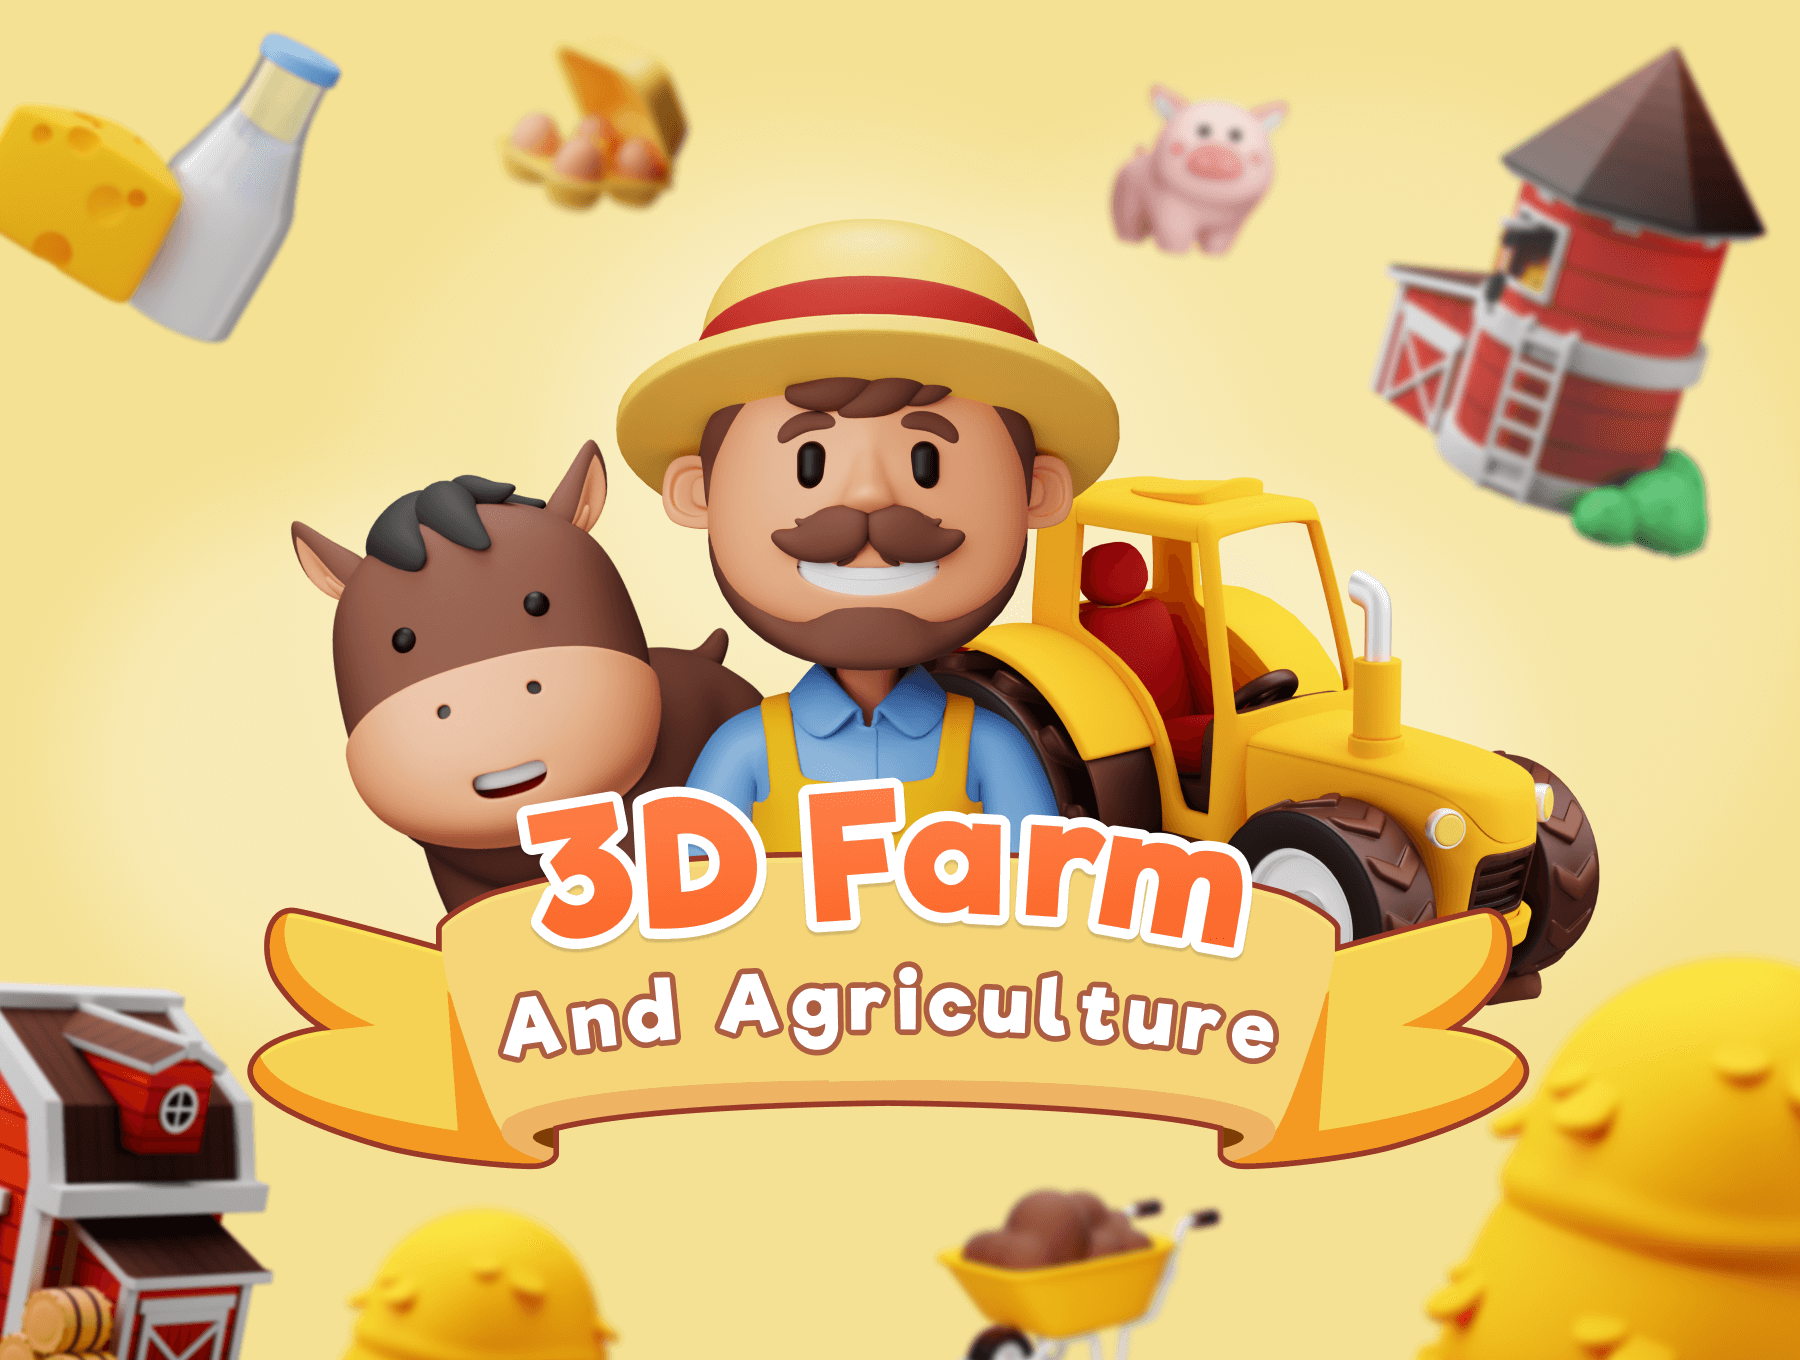 Farmy – Farm And Agriculture 3D Icon Set  20款农场农业农作物3D图标icon设计素材png免抠图片